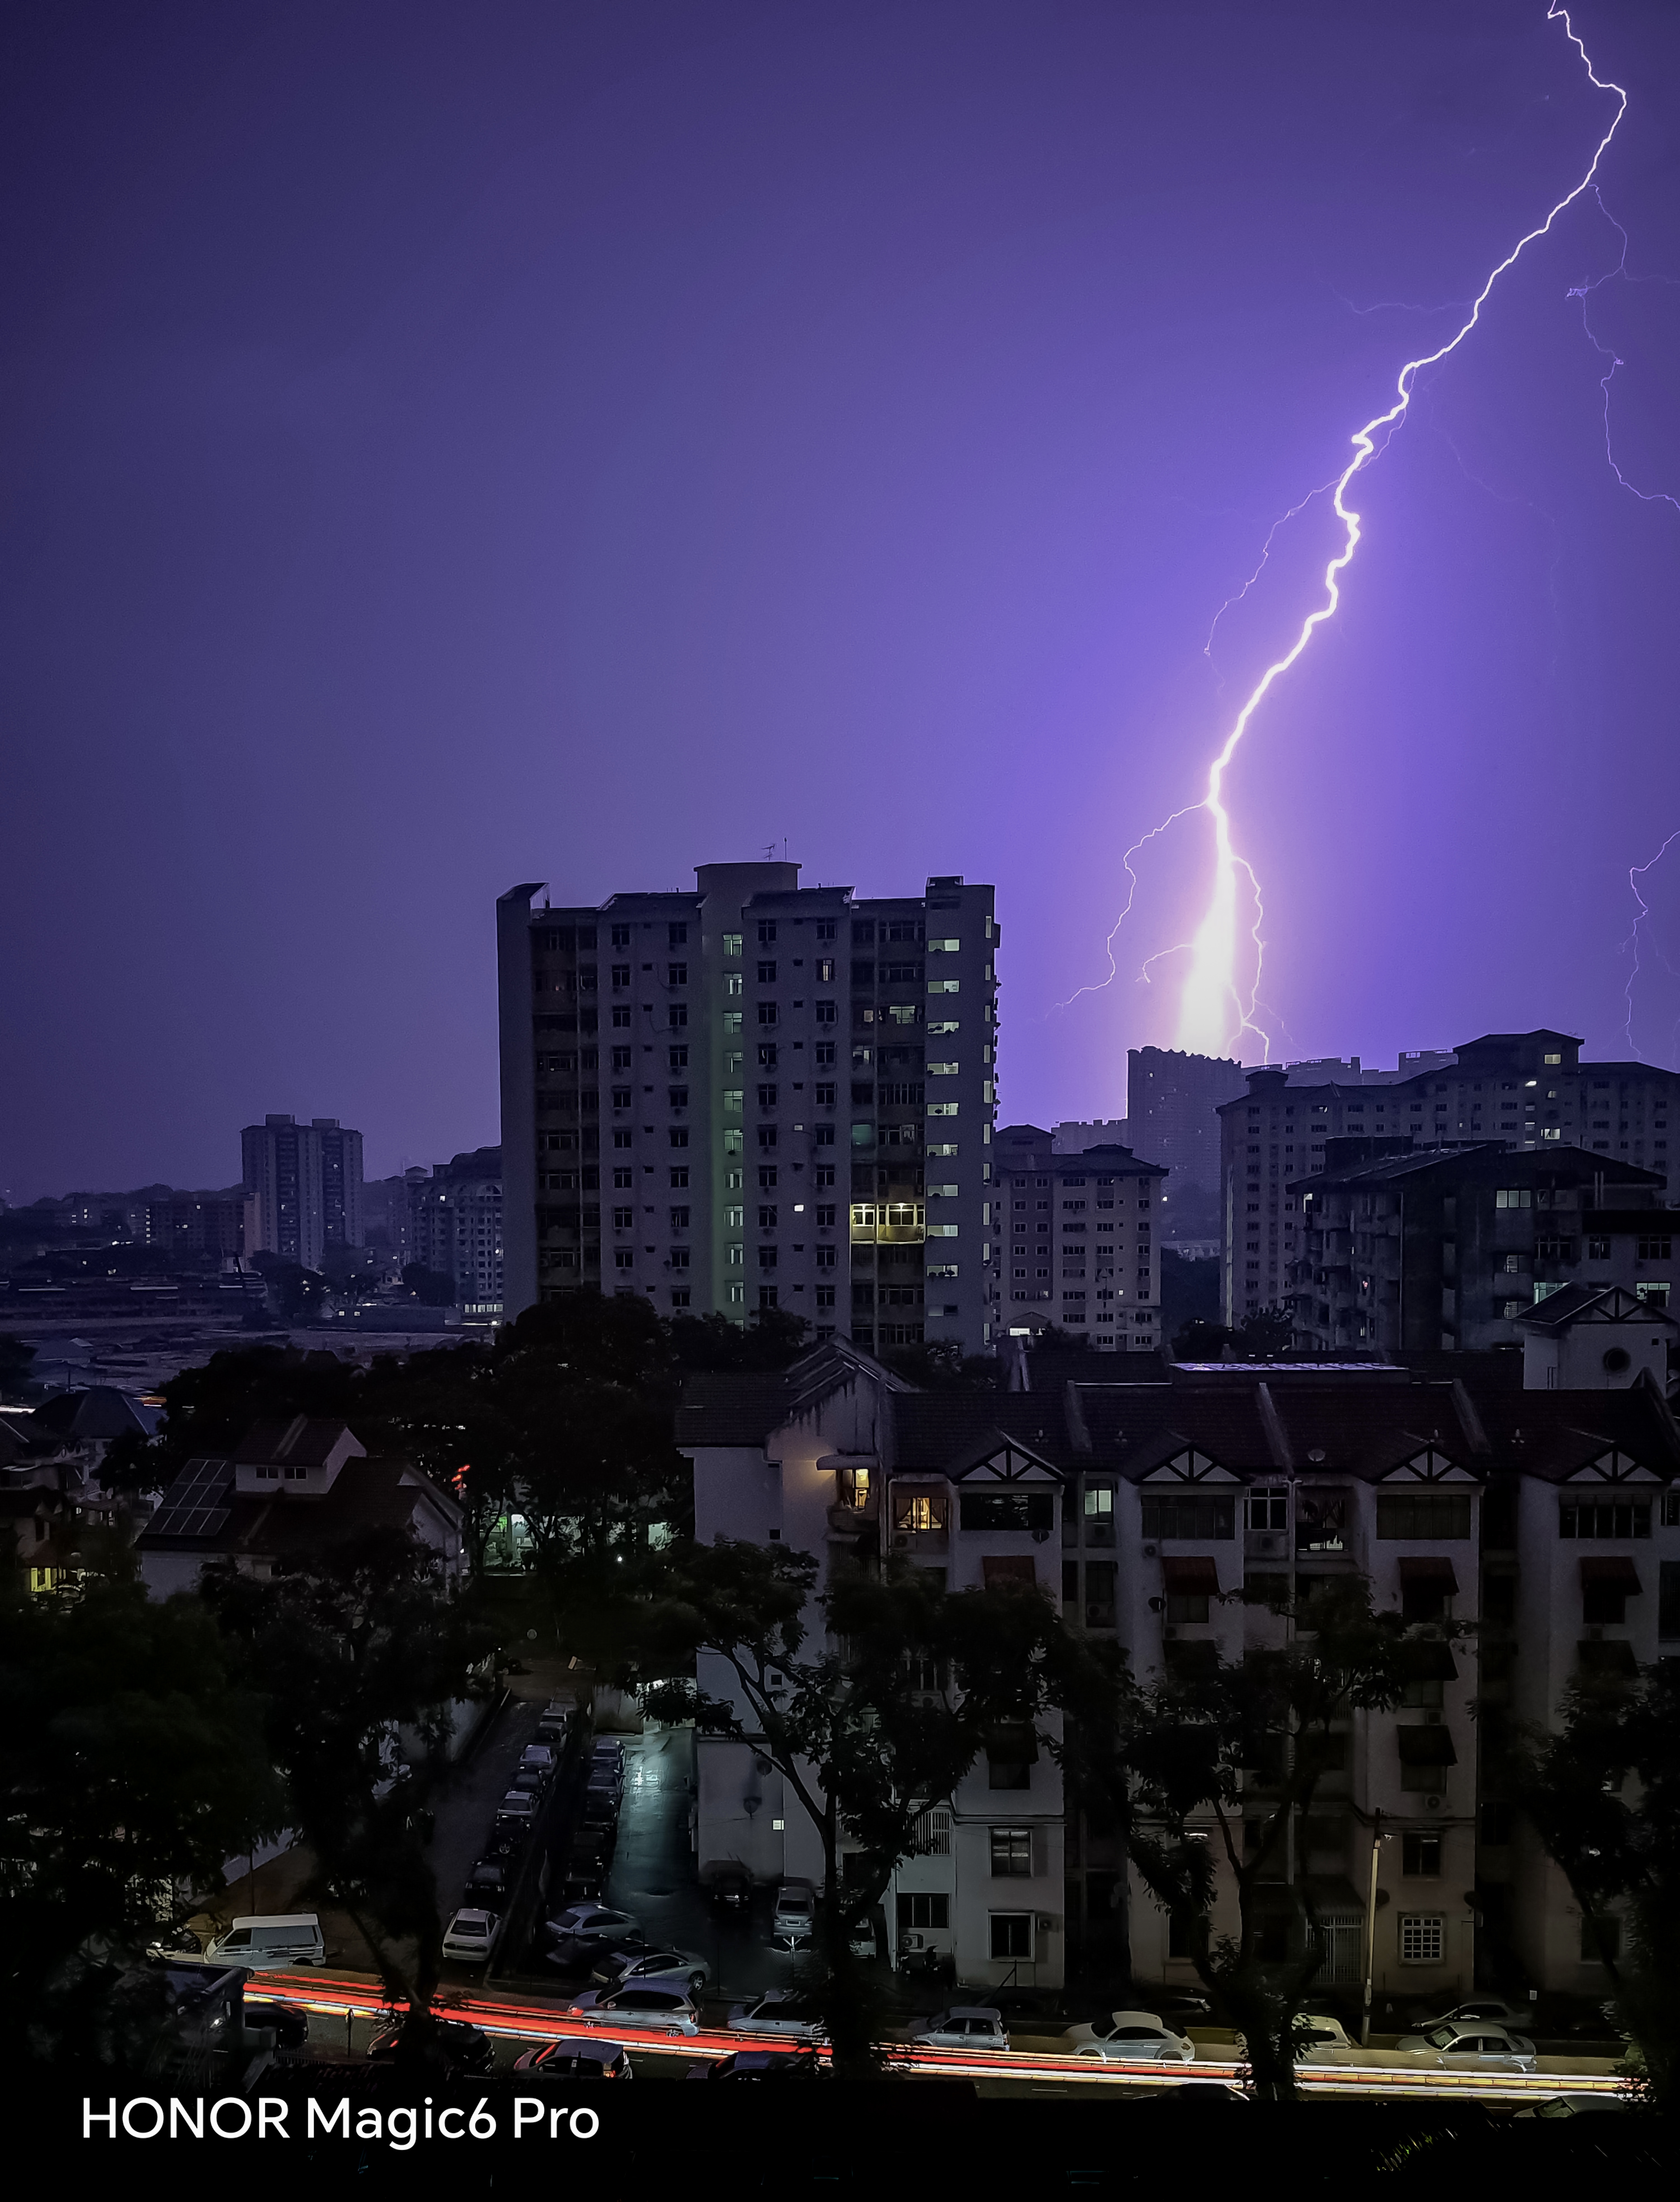 Thunder lightning in purple by kenji ooi